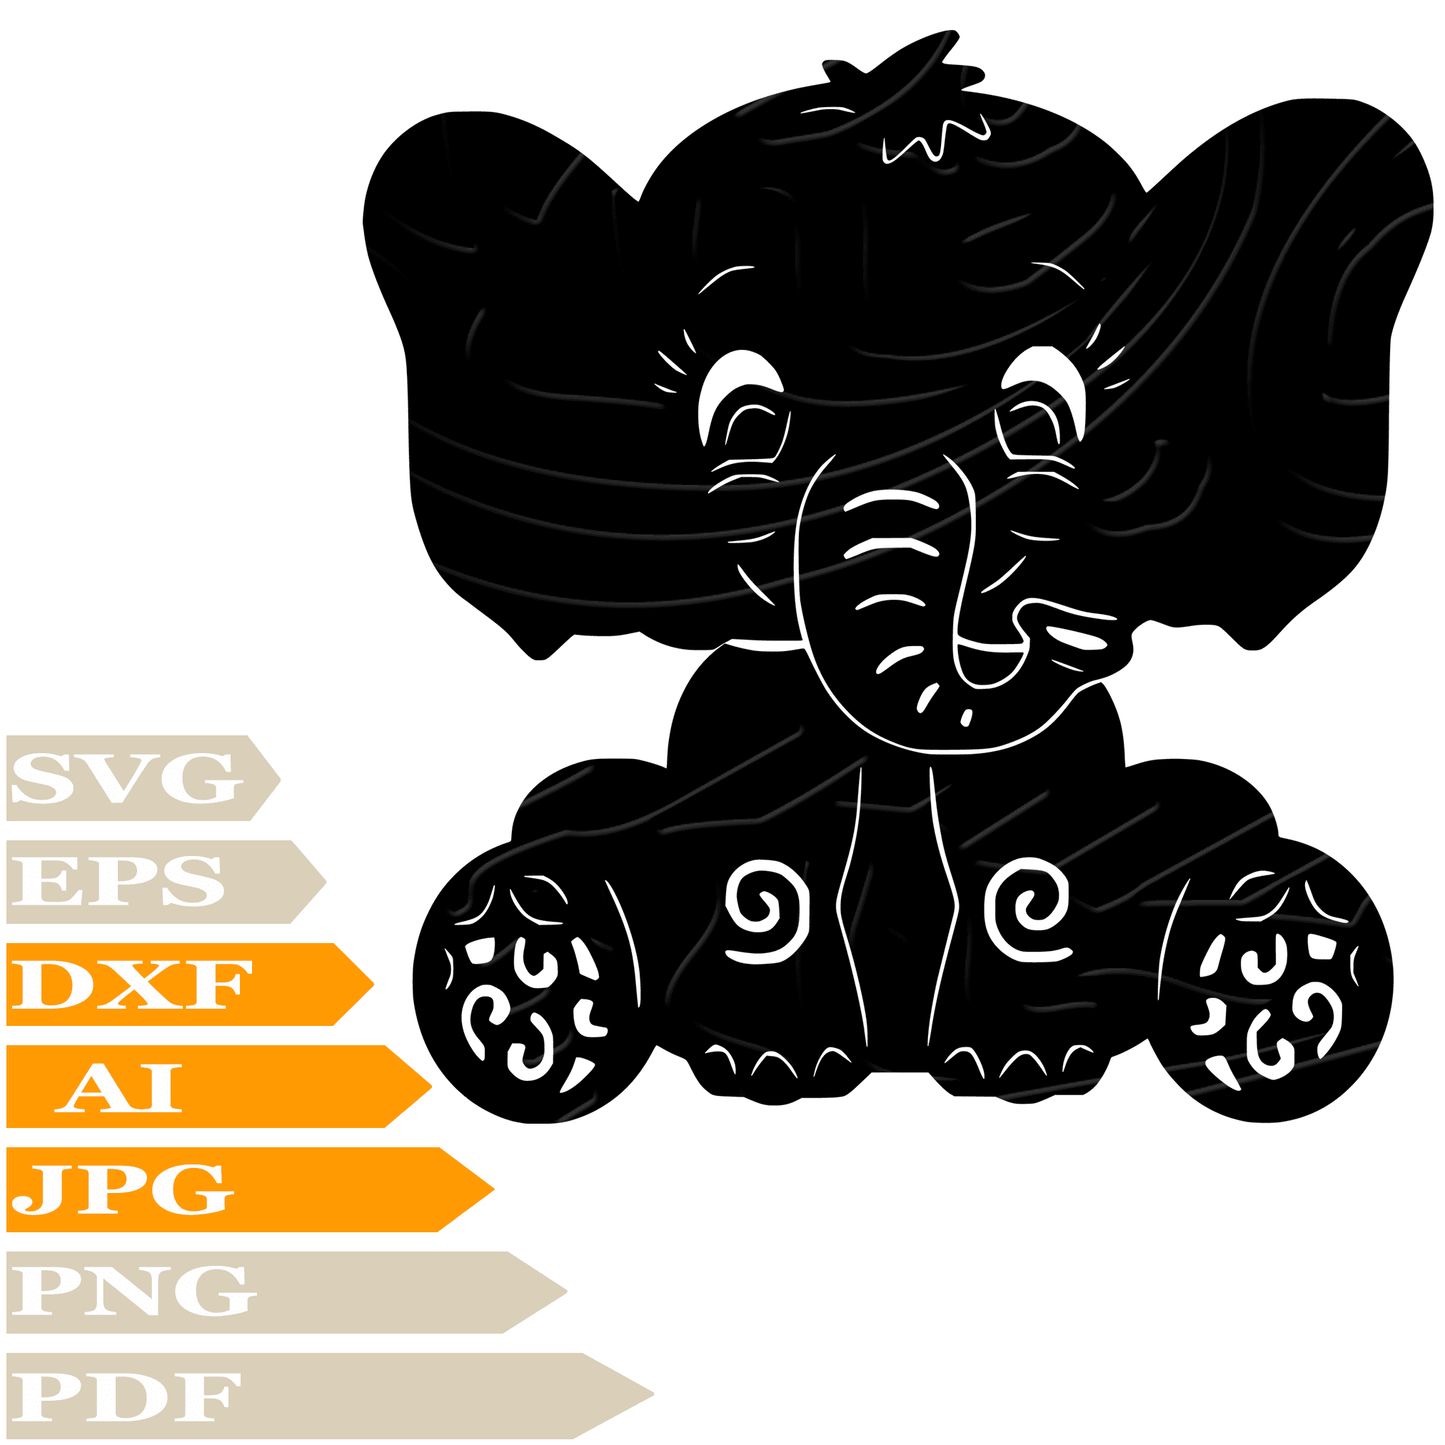 Sofvintage-Elephant SVG-Cute Elephant SVG Design-Funny Elephant SVG File-Elephant Digital Vector Download-Cute Elephant PNG-Funny Elephant For Cricut-Elephant Clip art-Cute Elephant-Cut File-Elephant T-Shirt-Elephant Wall Sticker-Elephant For Tattoo-Funy Elephant Printable-Cute Elephant Silhouette